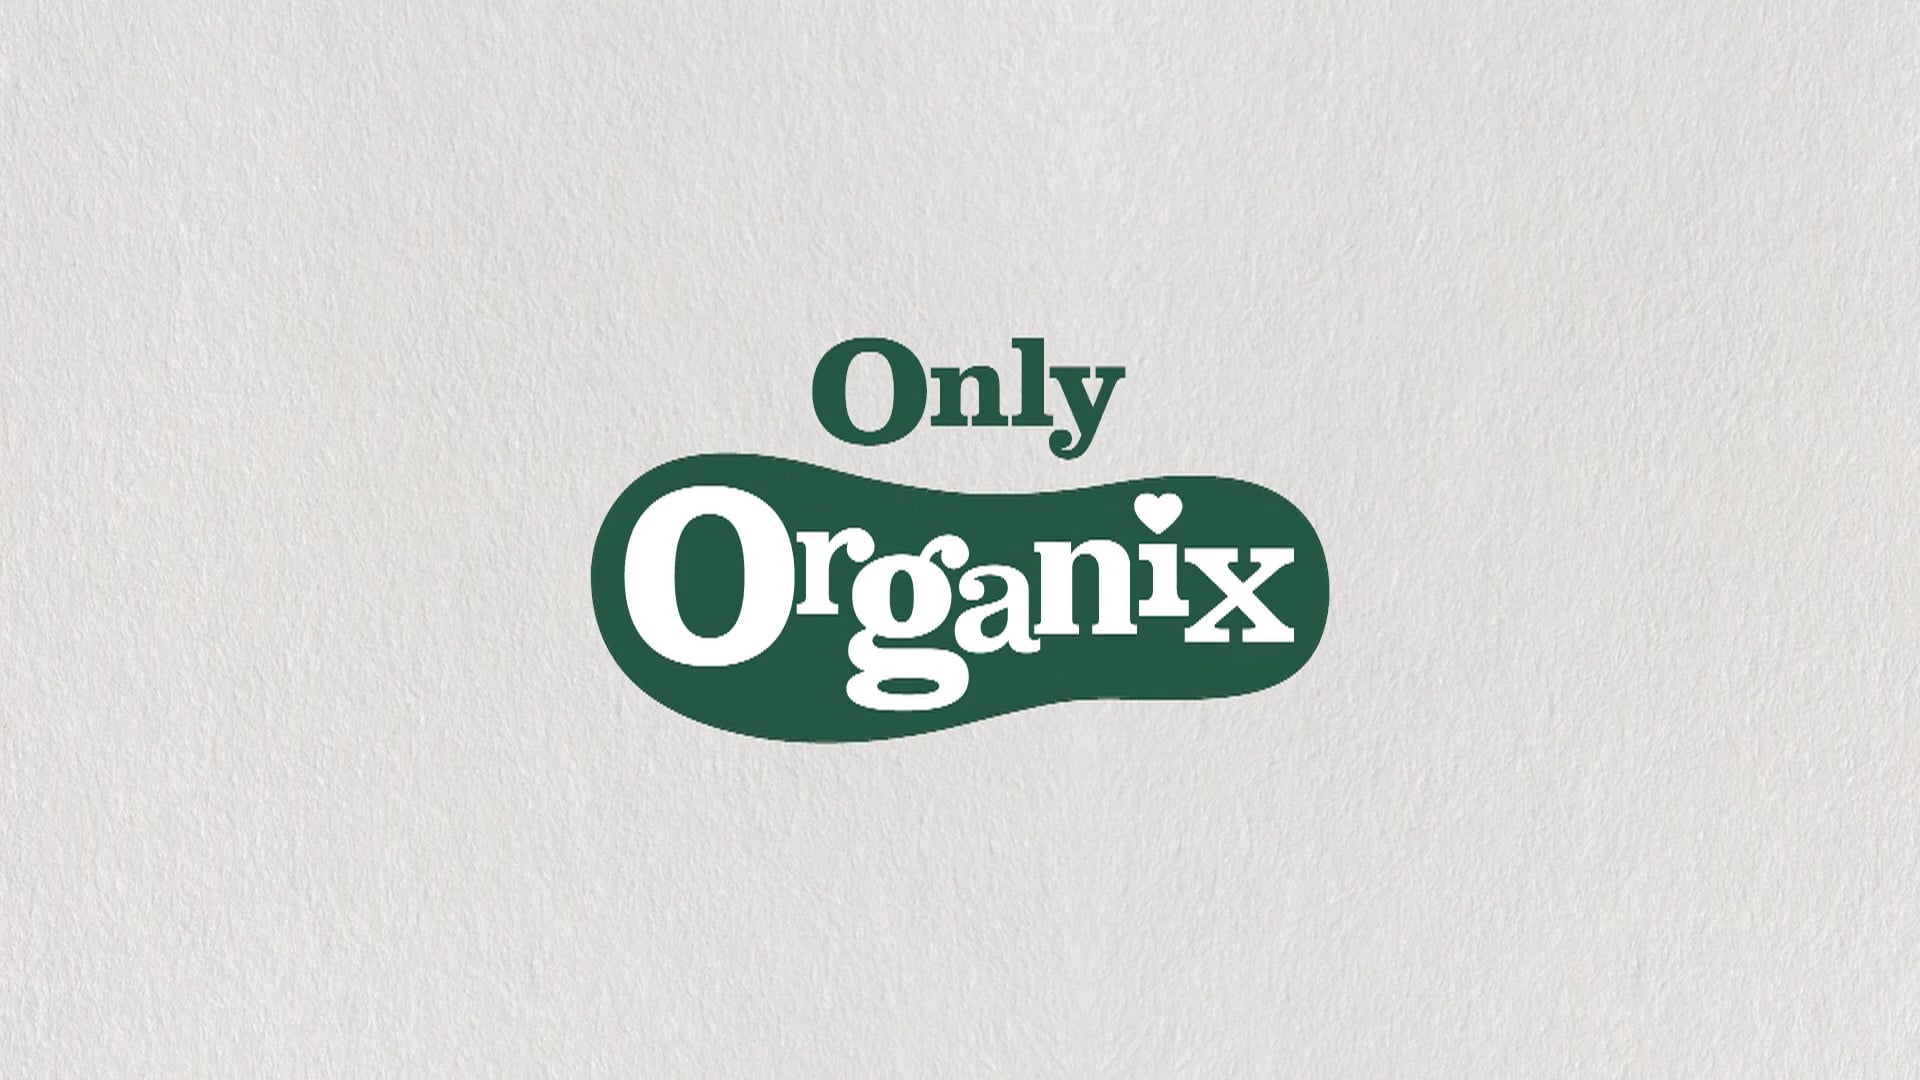 Organix - On The Farm